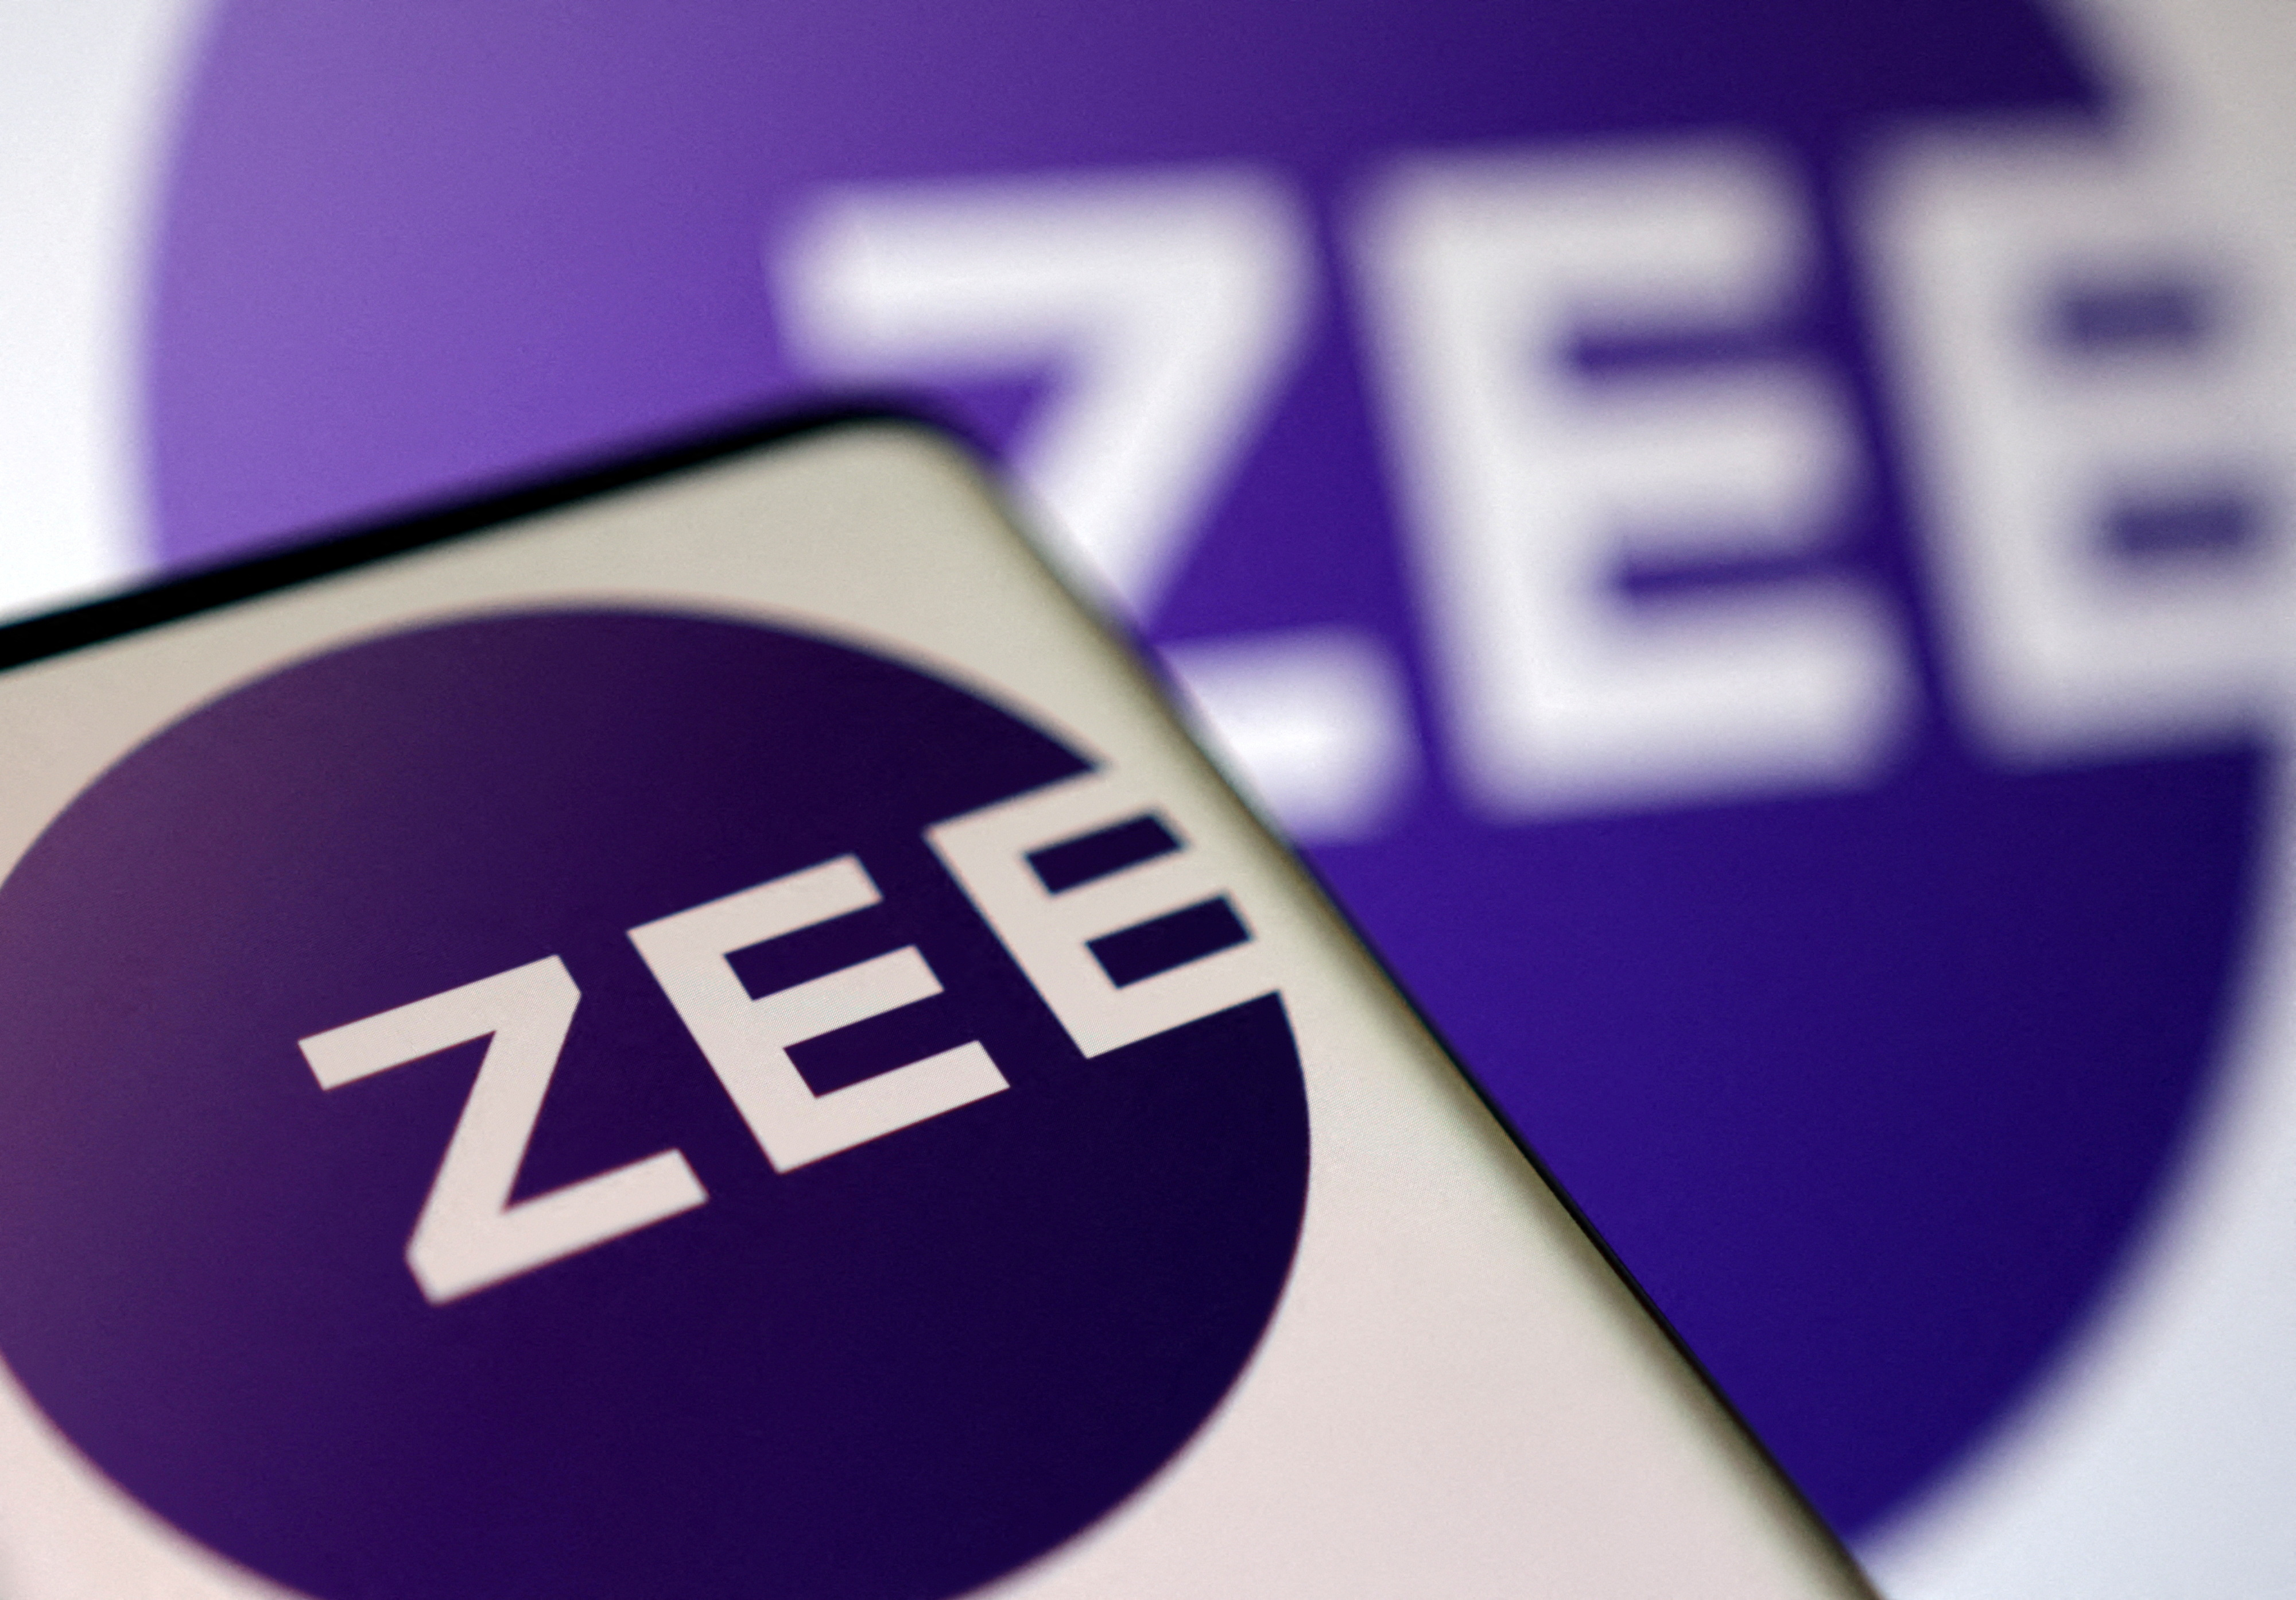 Illstration shows Zee Entertainment logo